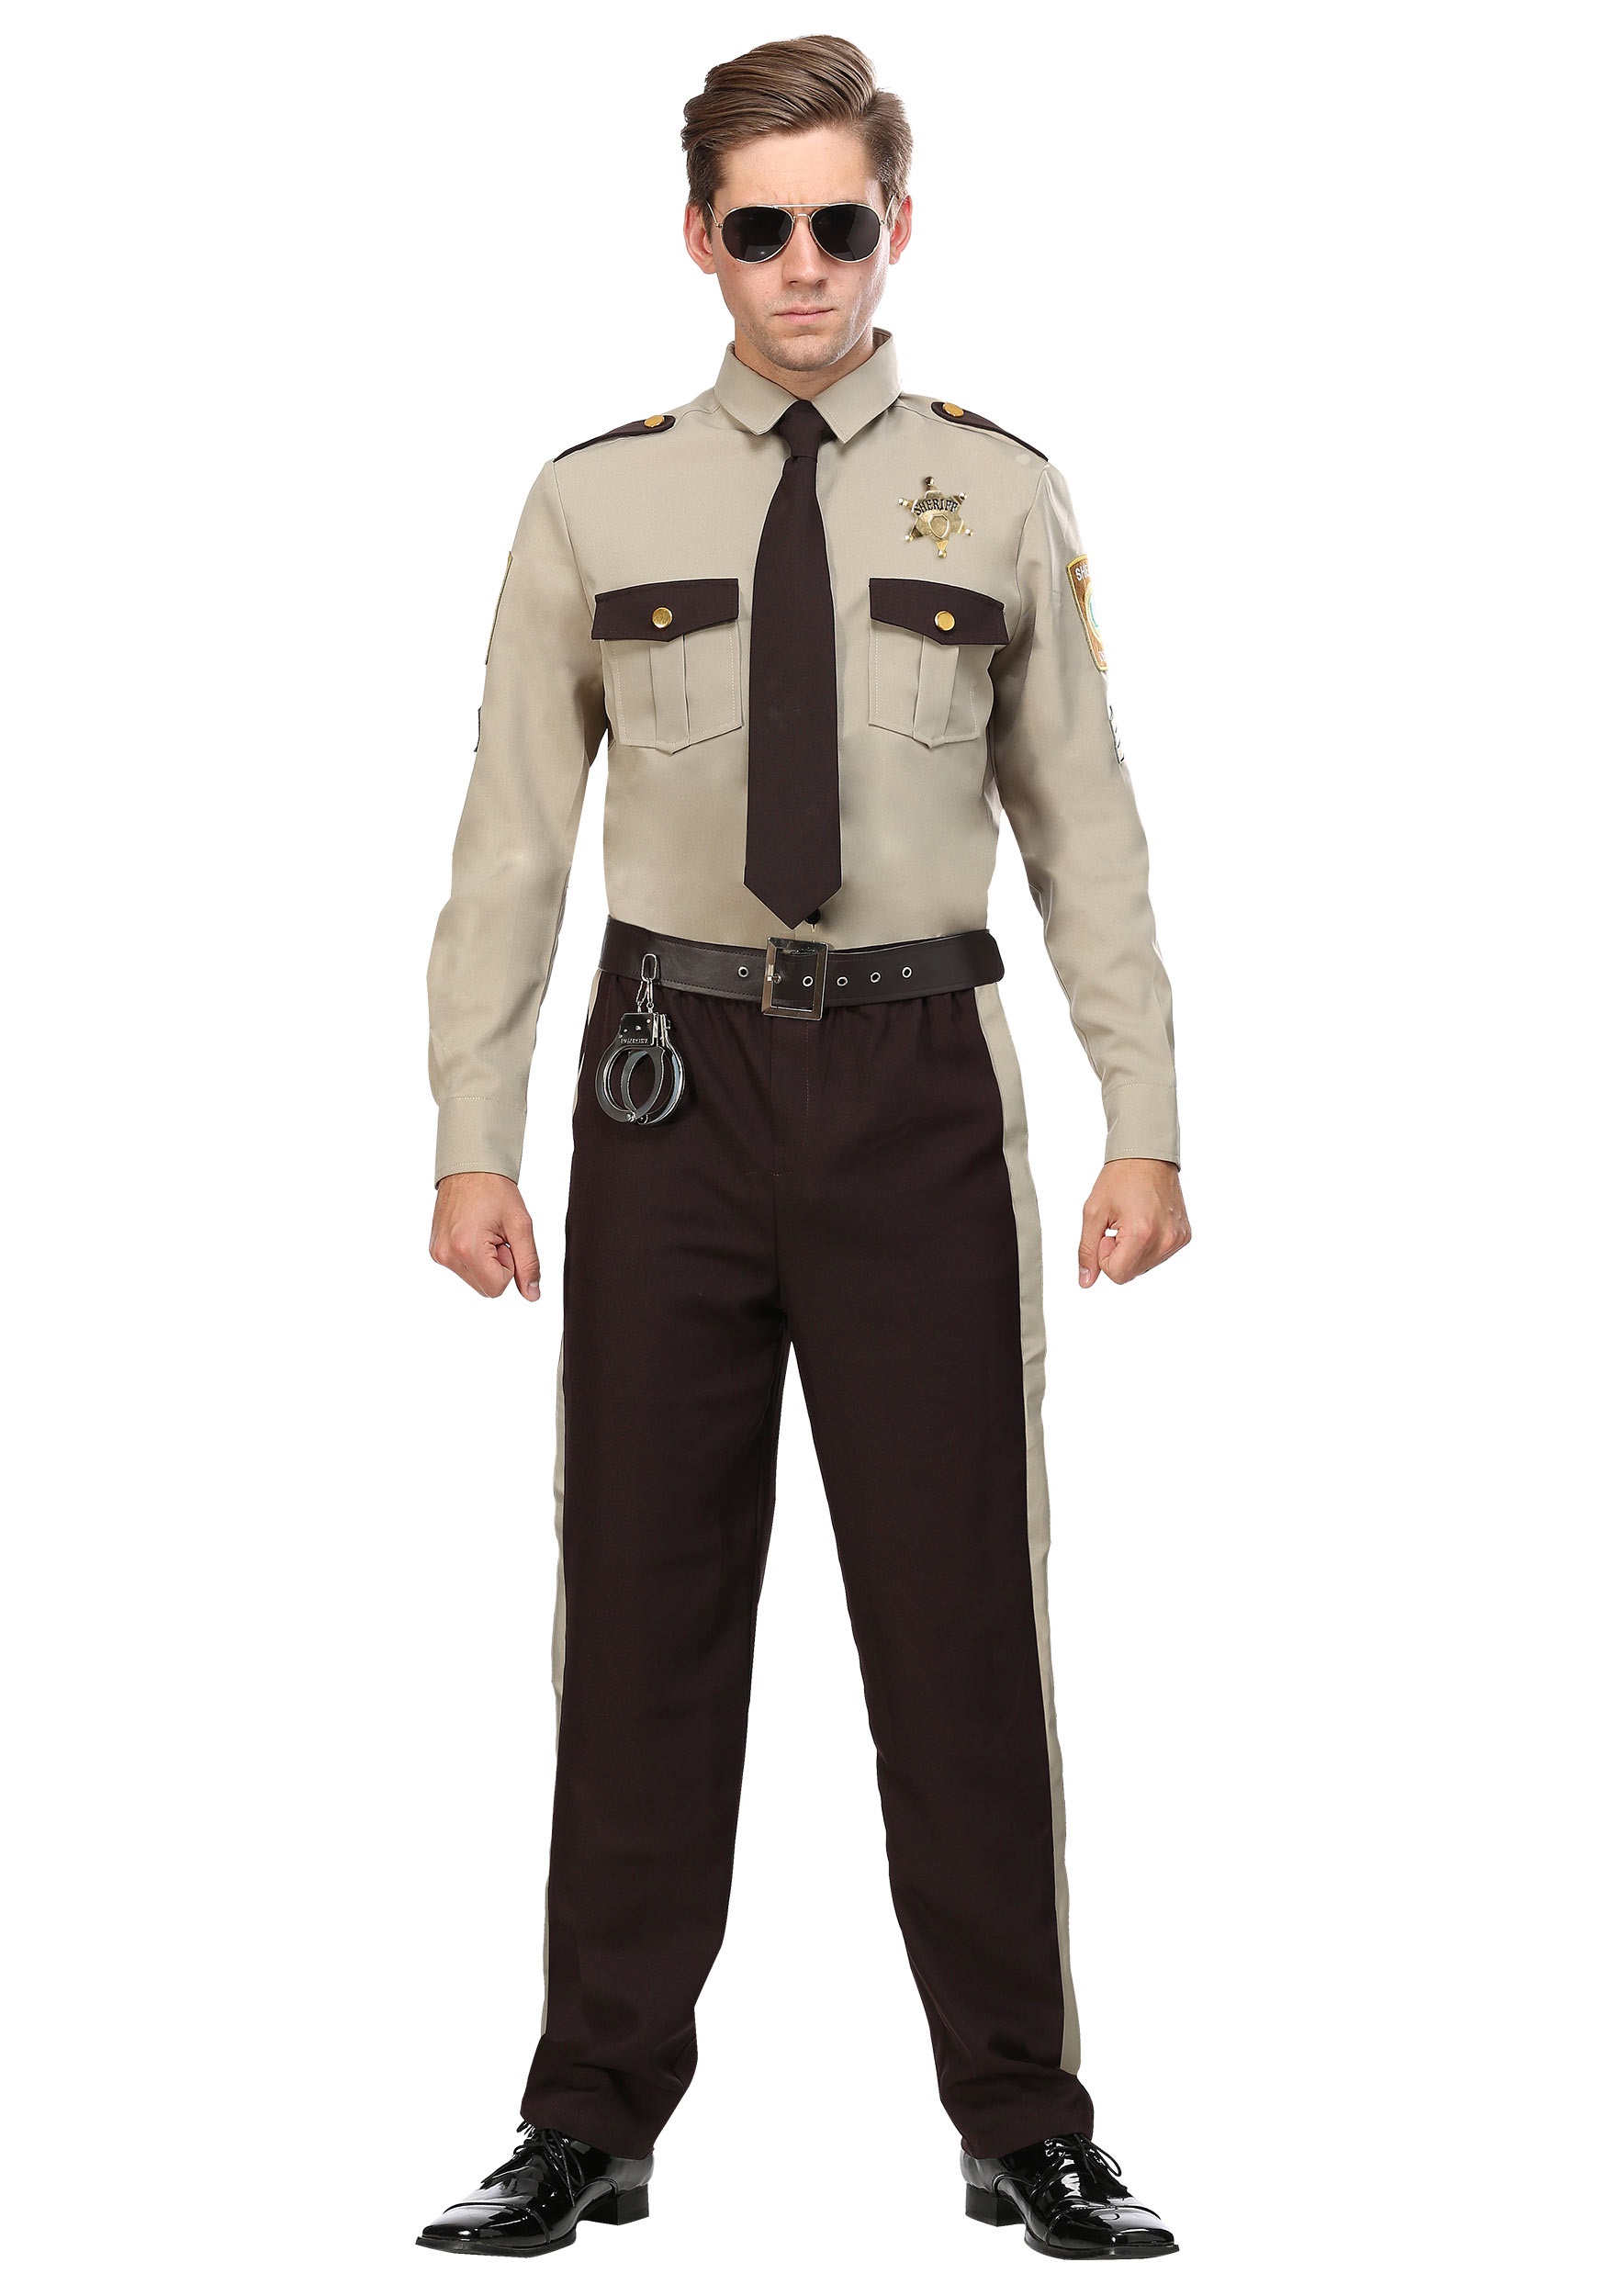 Plus Size Men’s Sheriff Costume